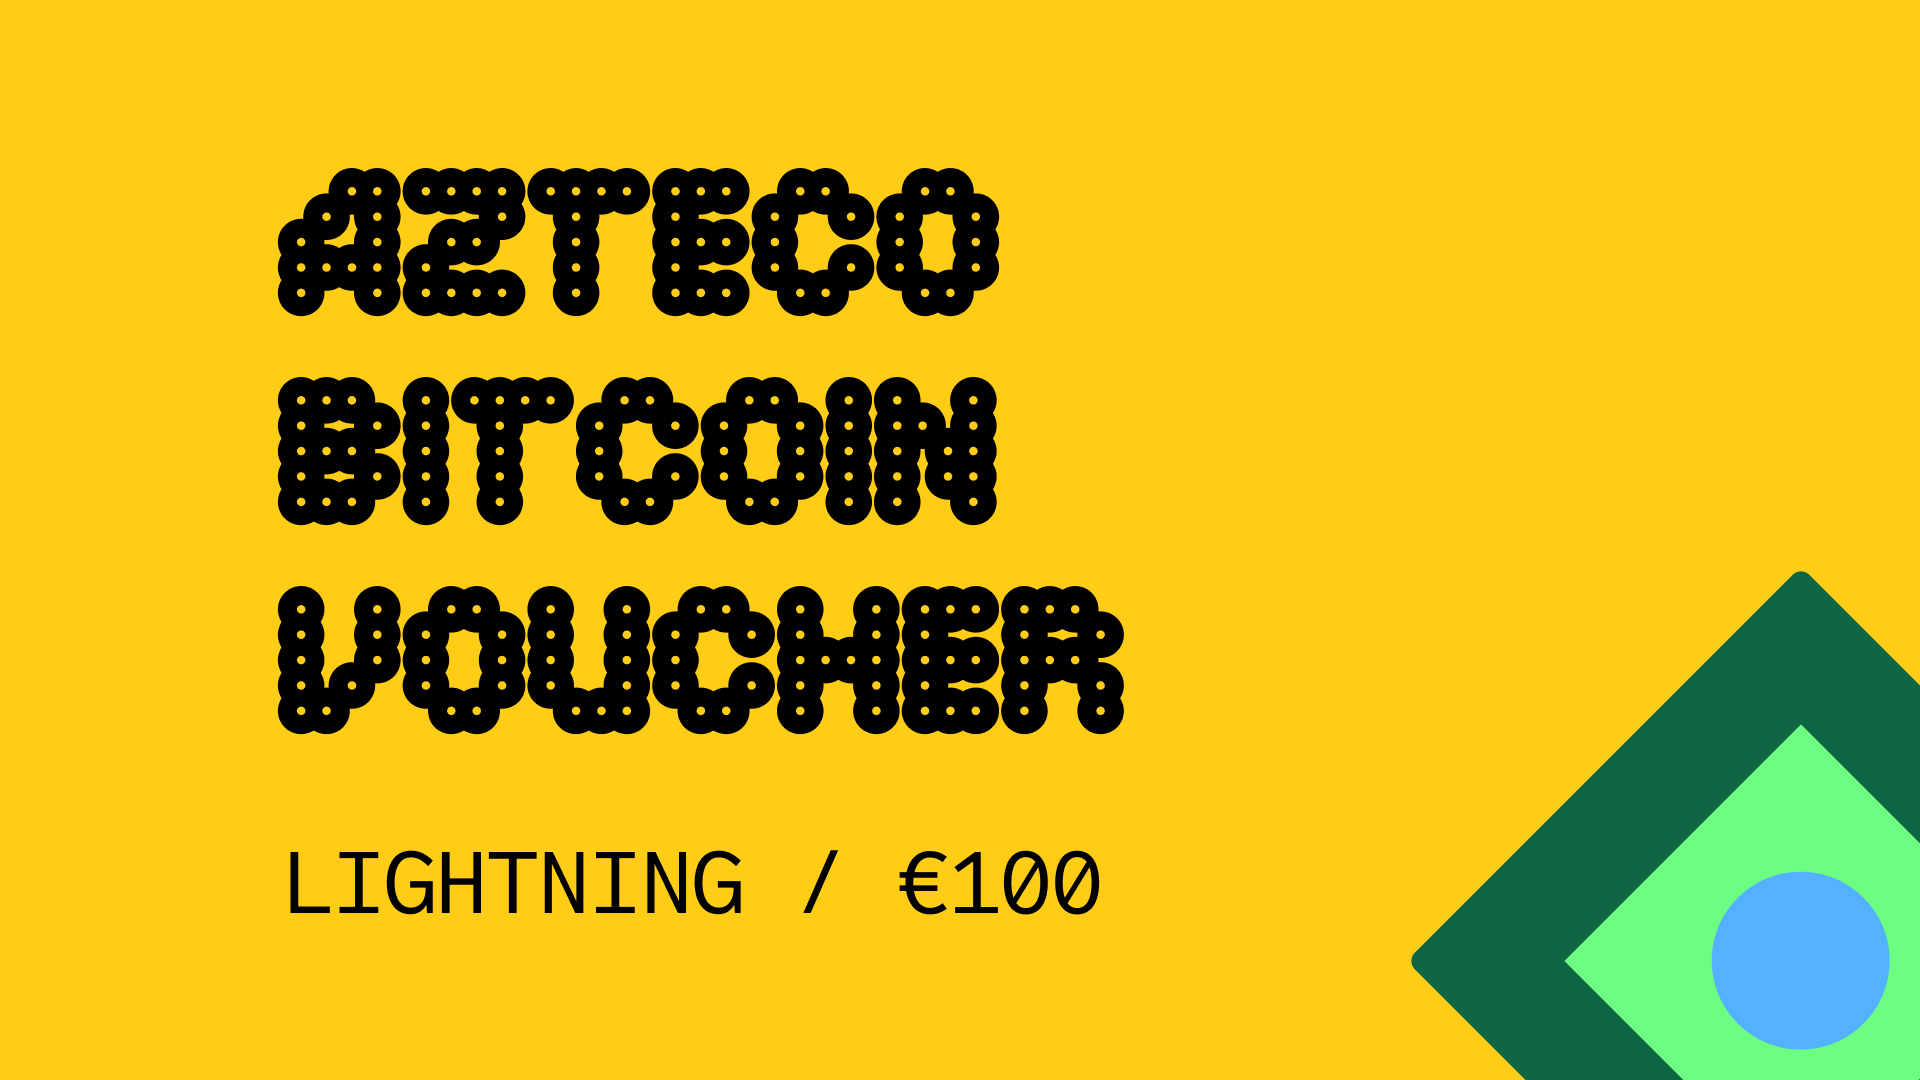 Azteco Bitcoin Lighting €100 Voucher [$ 112.98]